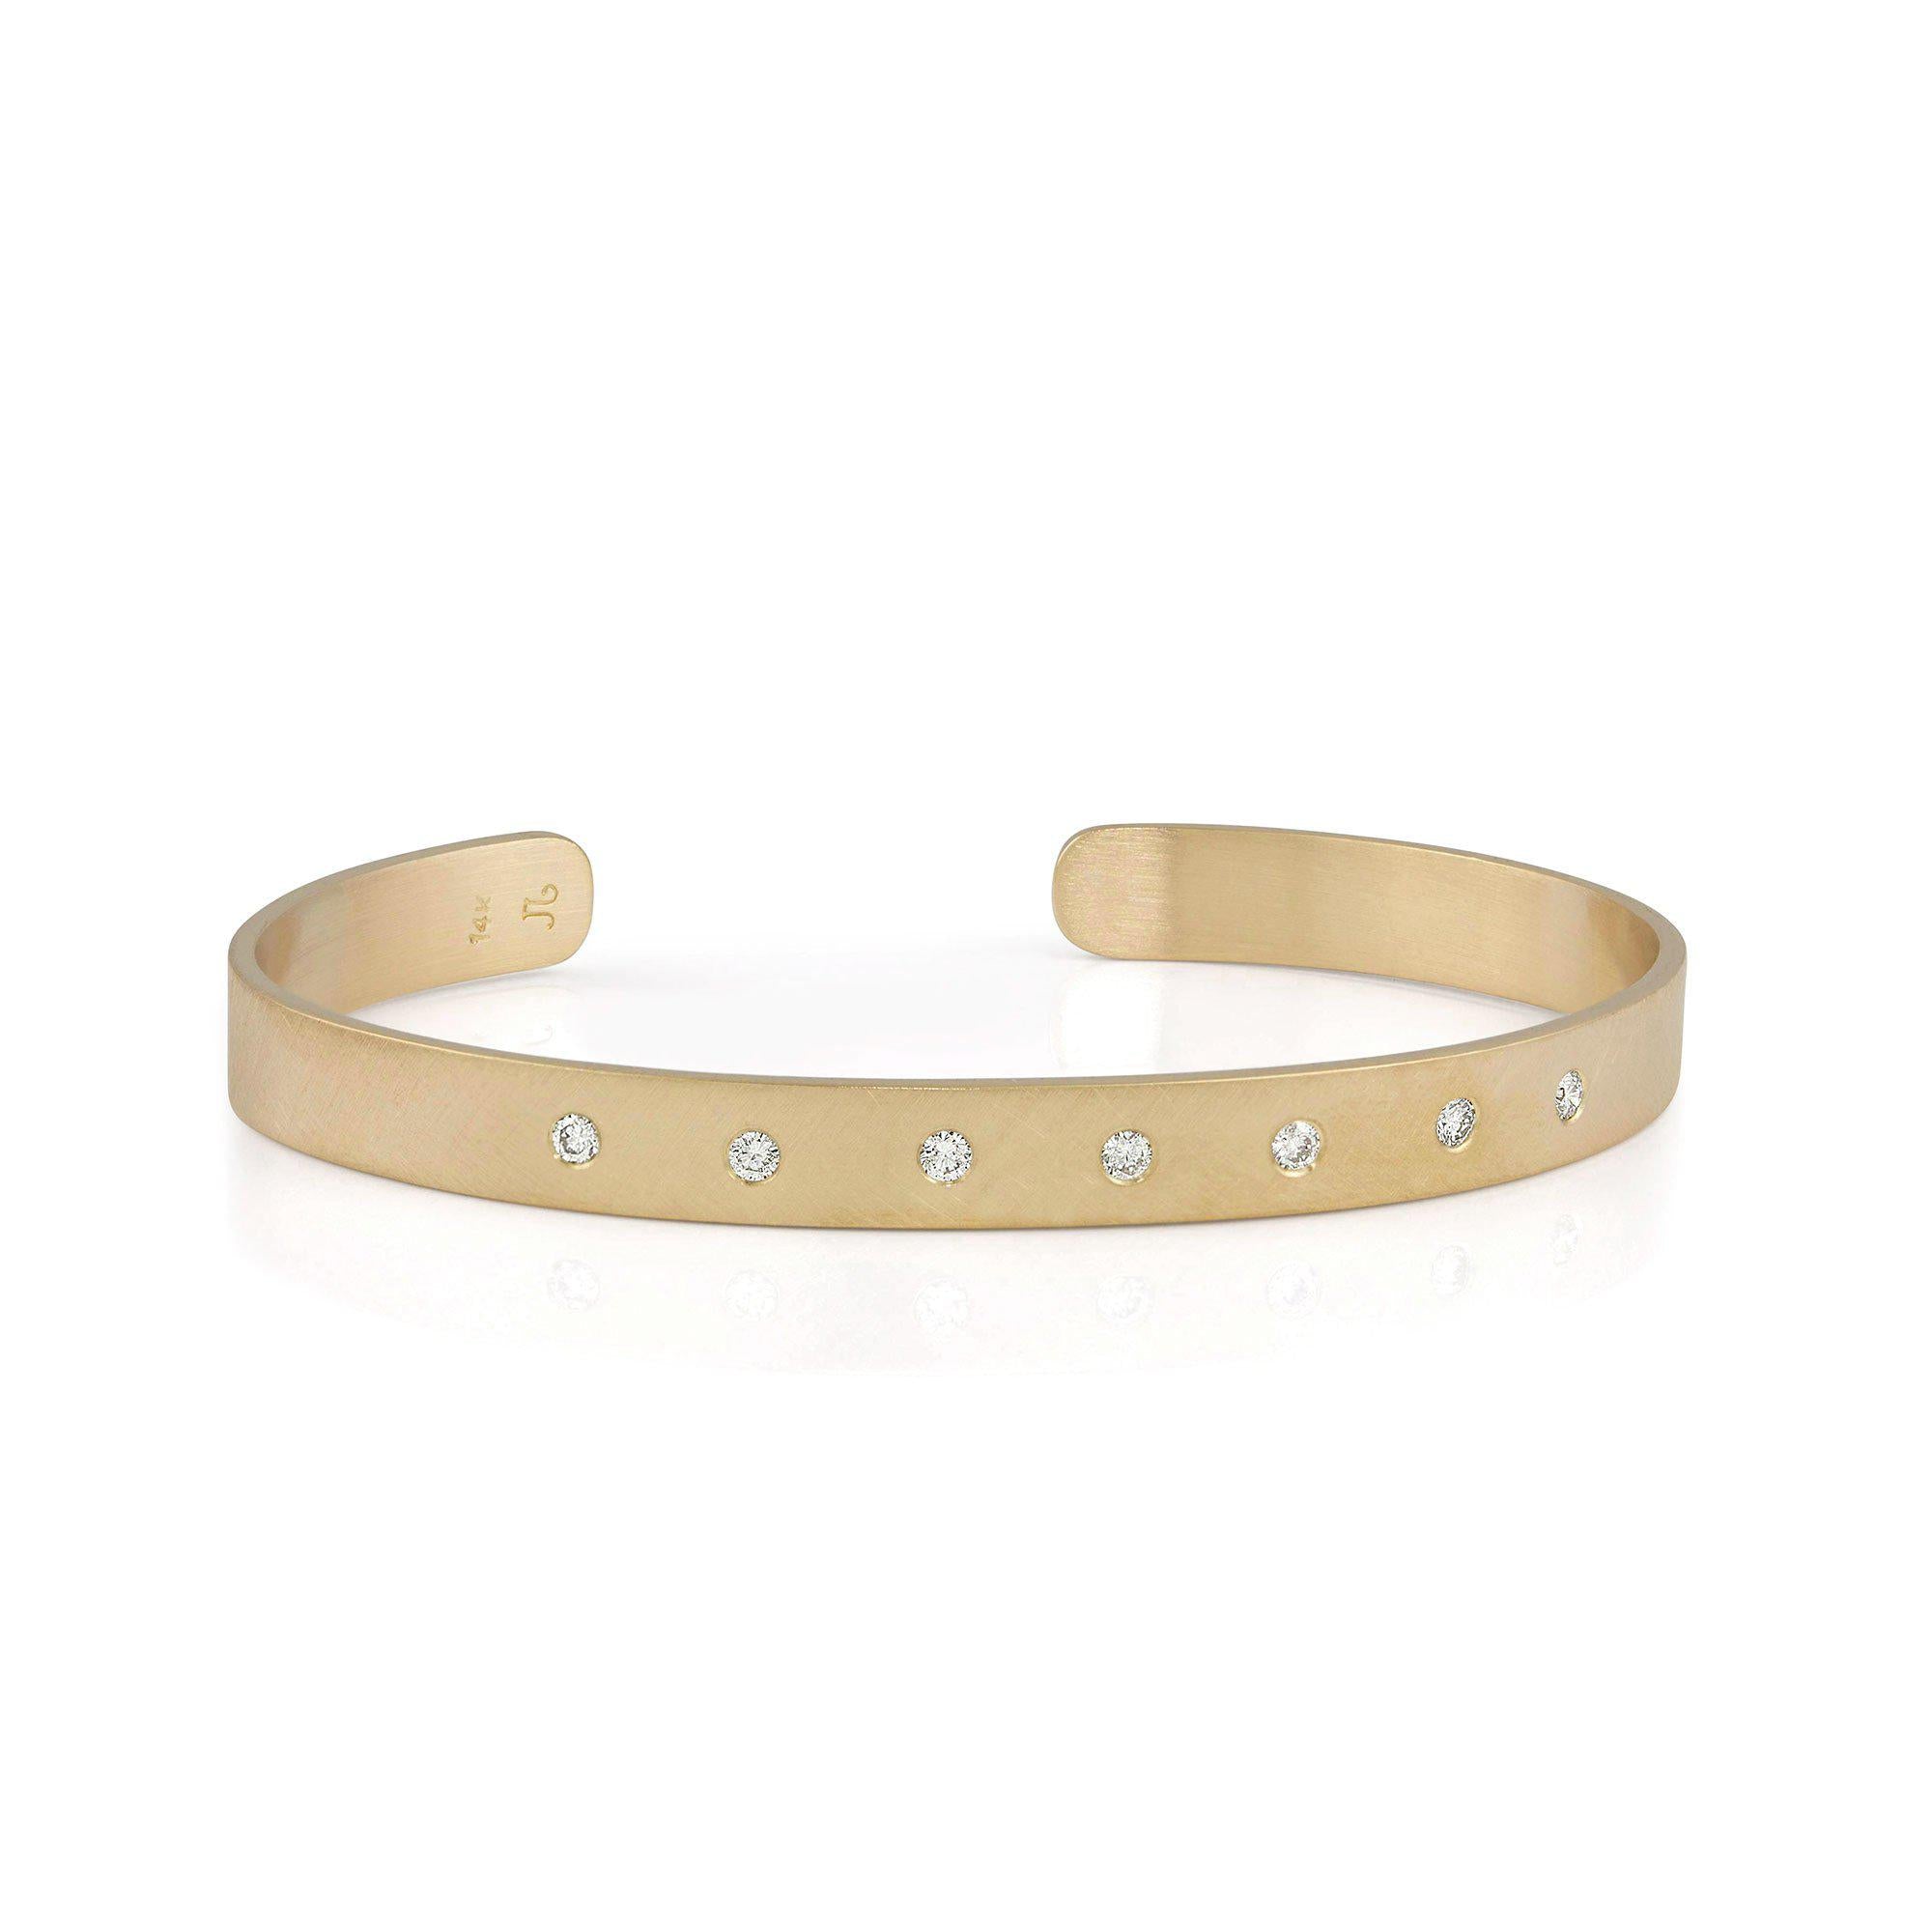 14k yellow gold BELA cuff bracelet with 7 diamonds